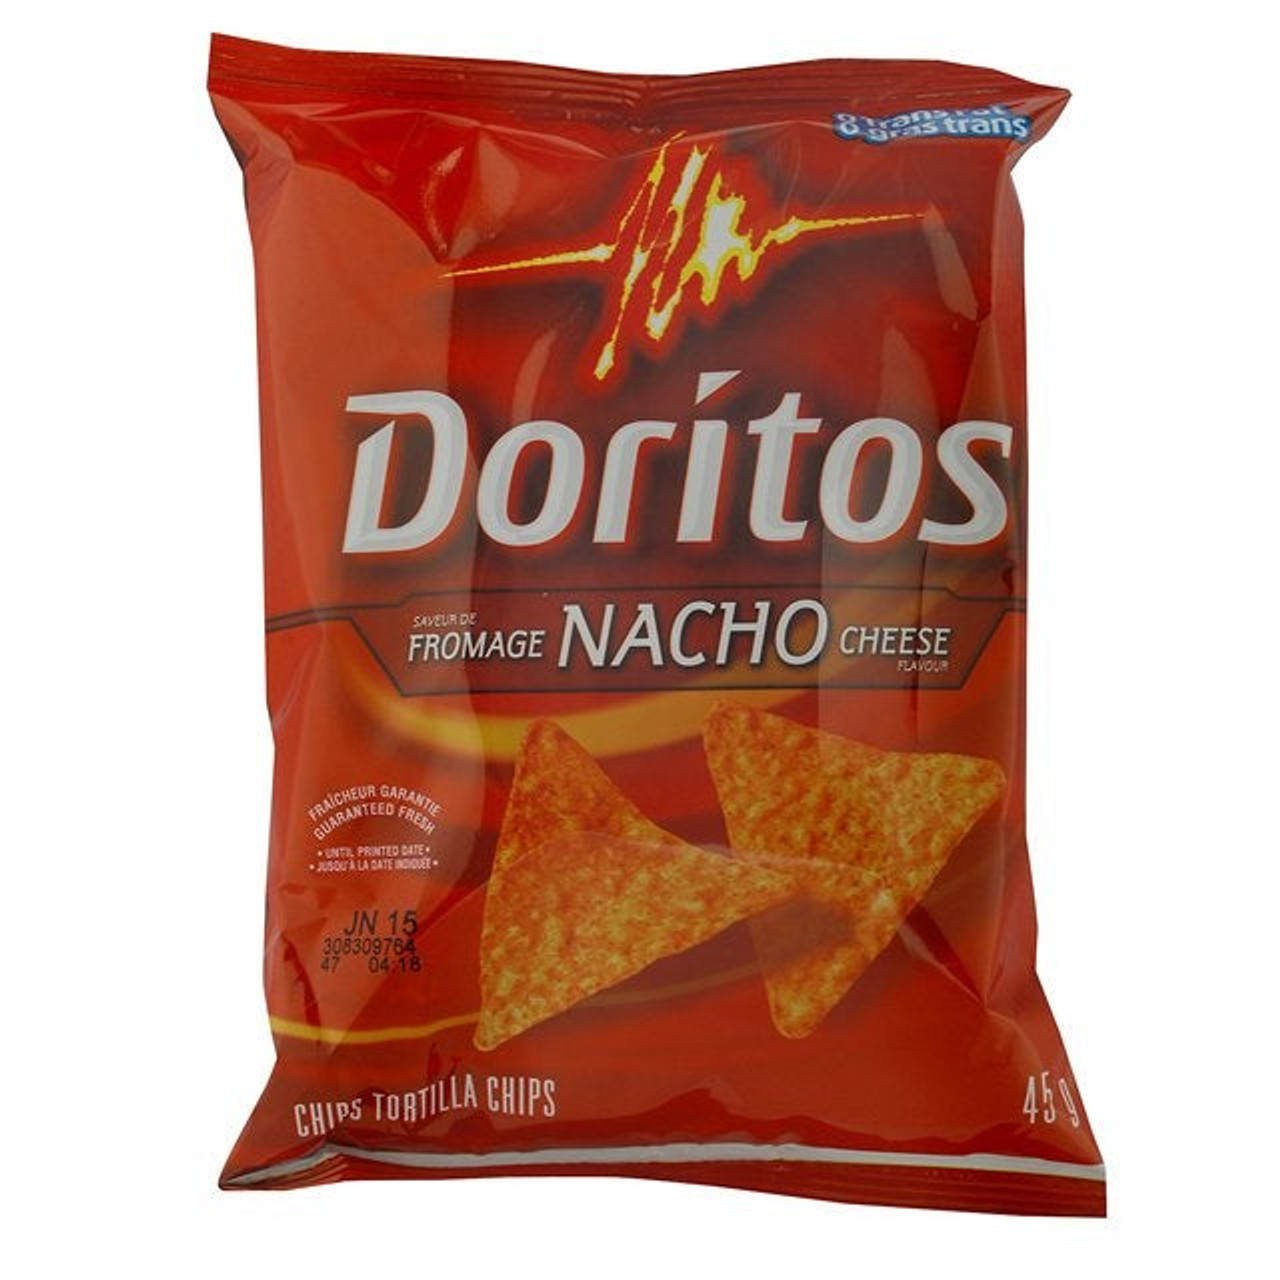 Doritos Nacho Cheese Chips, Trans Fat Compliant | 45G/Unit, 48 Units/Case